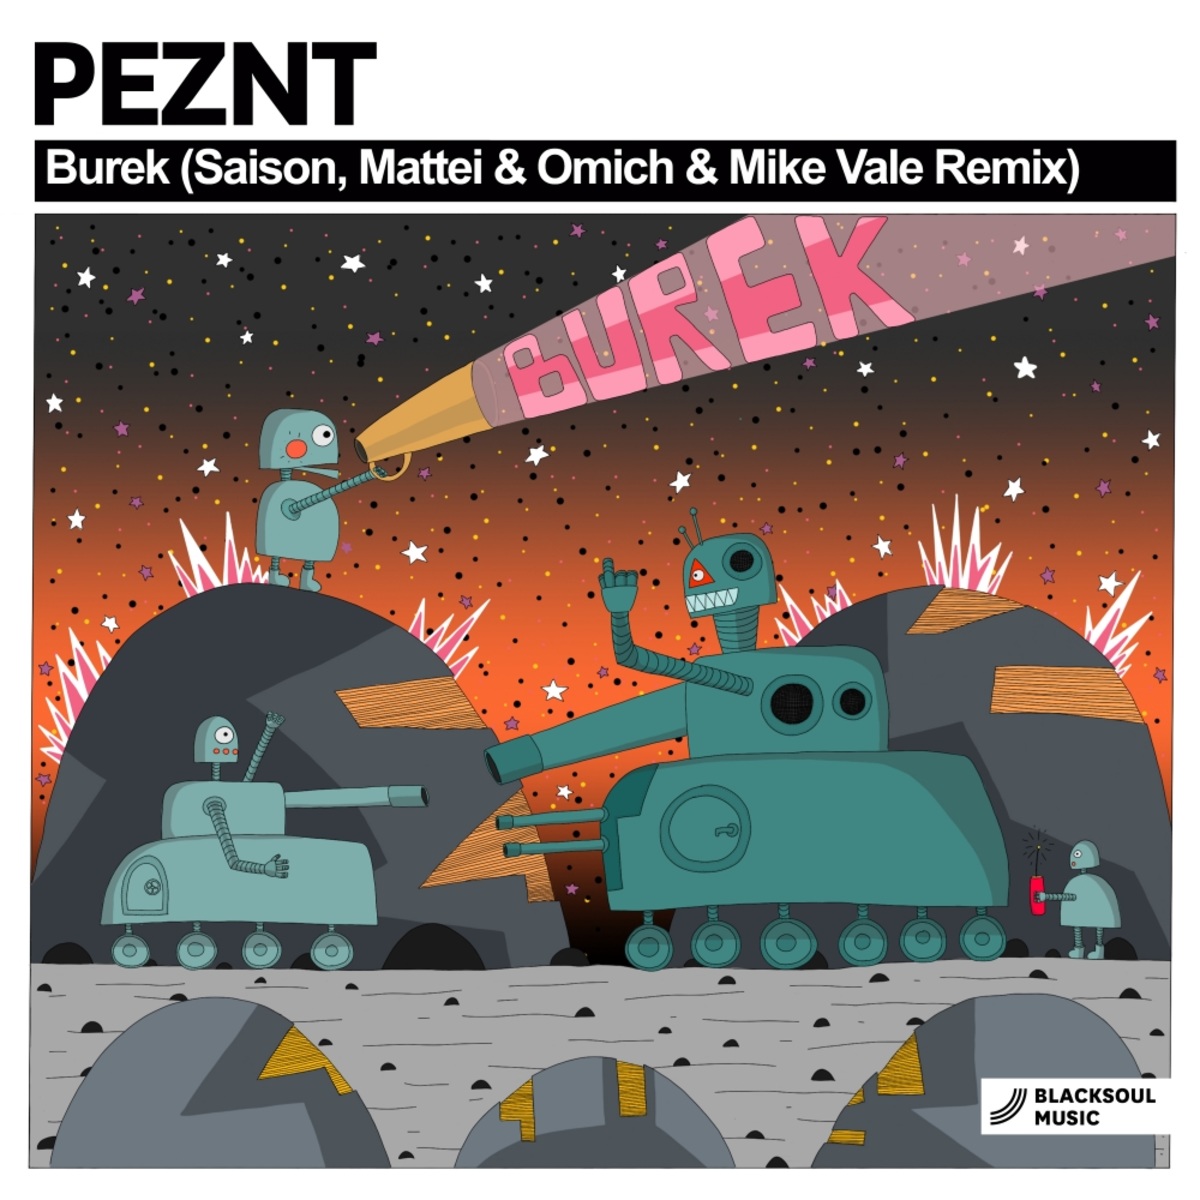 PEZNT - Burek / Blacksoul Music